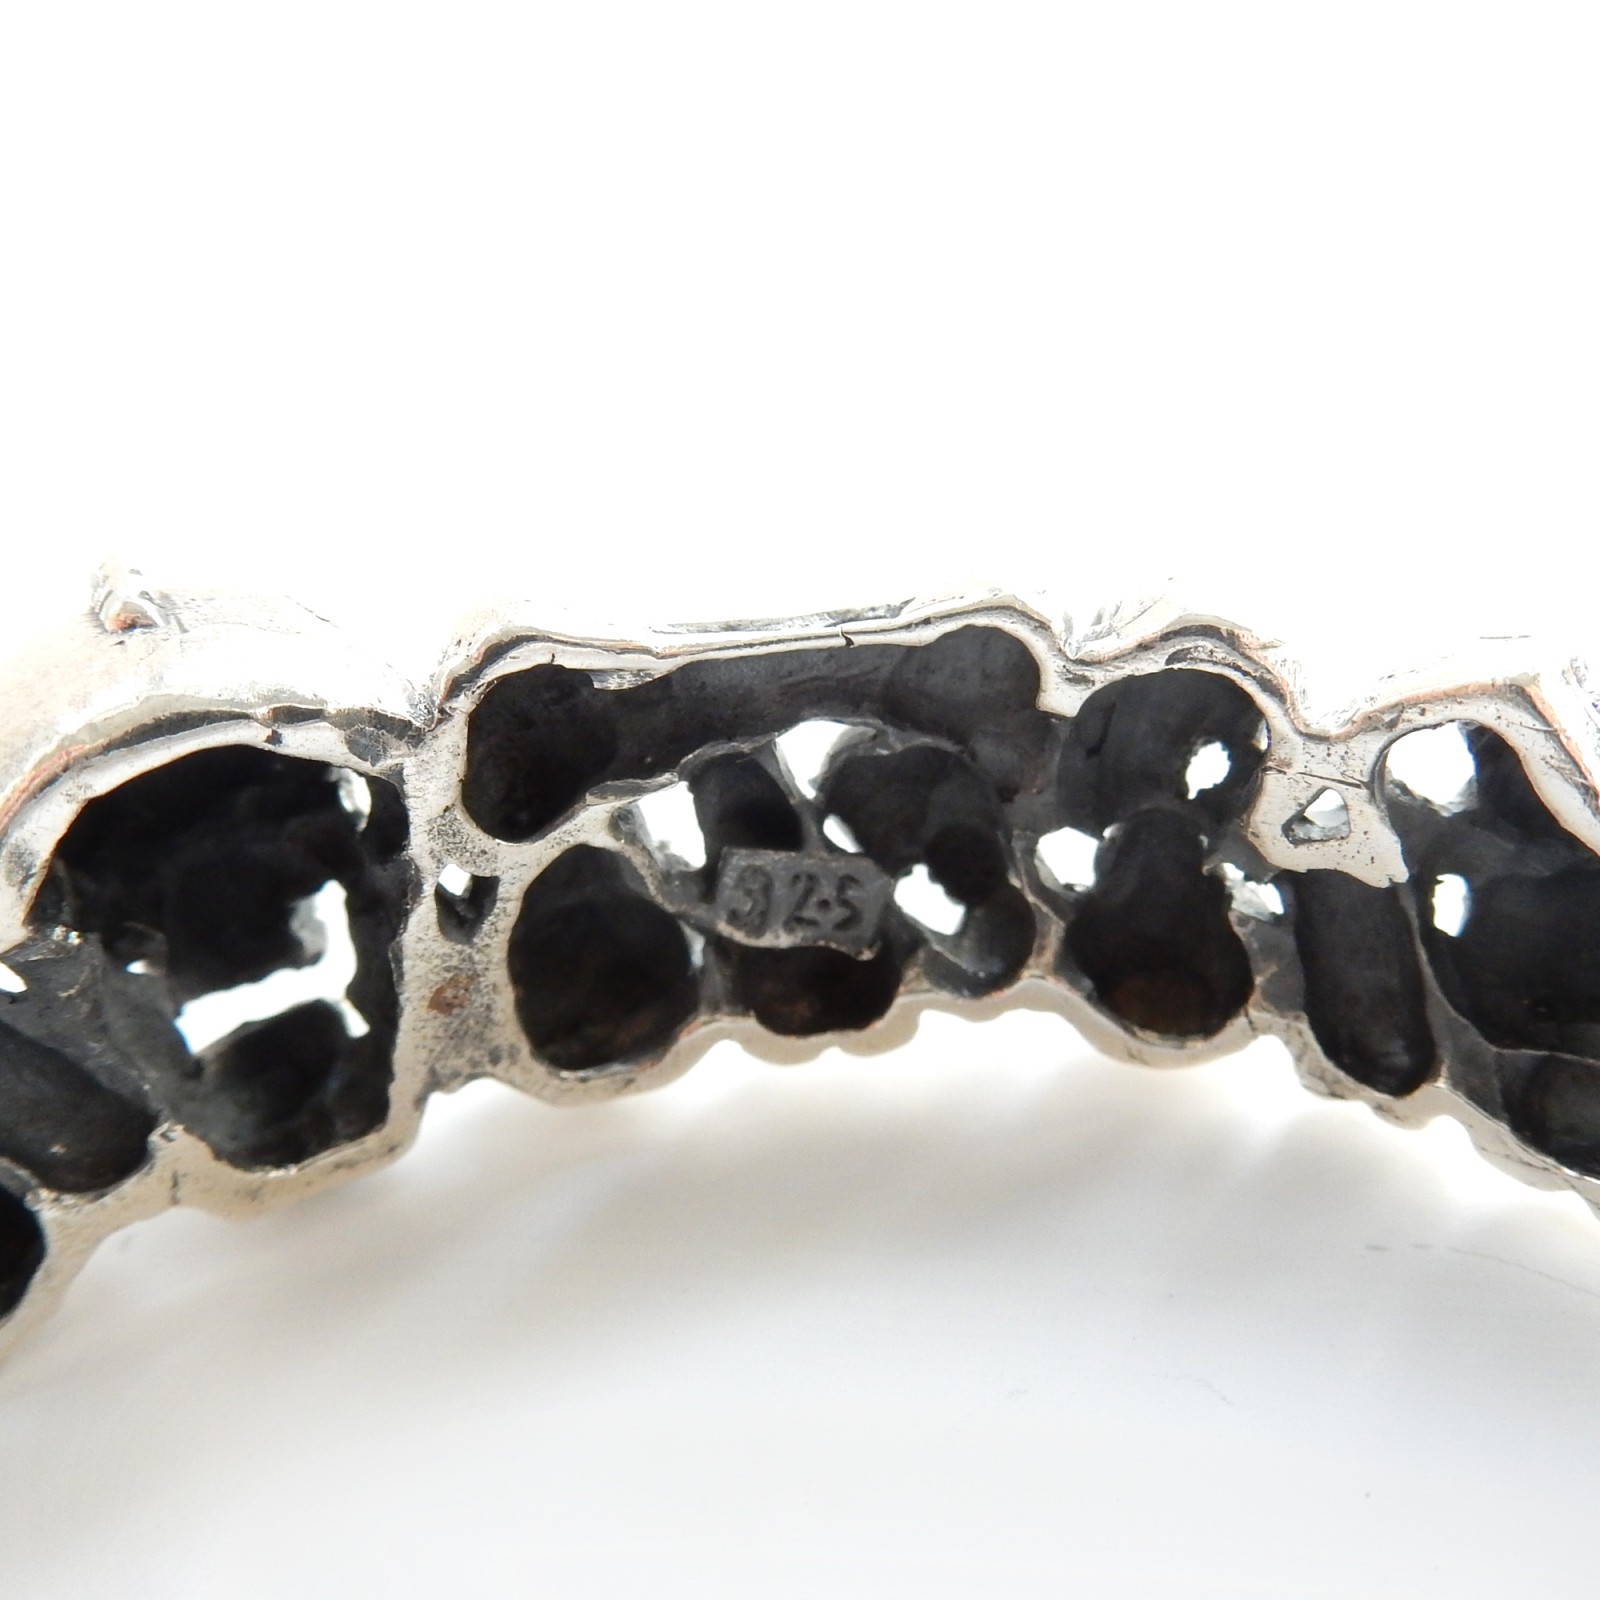 Buy Imported Fashion Punk Silver Skeleton Hand Fingers Skeleton Bracelet  Slave Ring at Amazonin